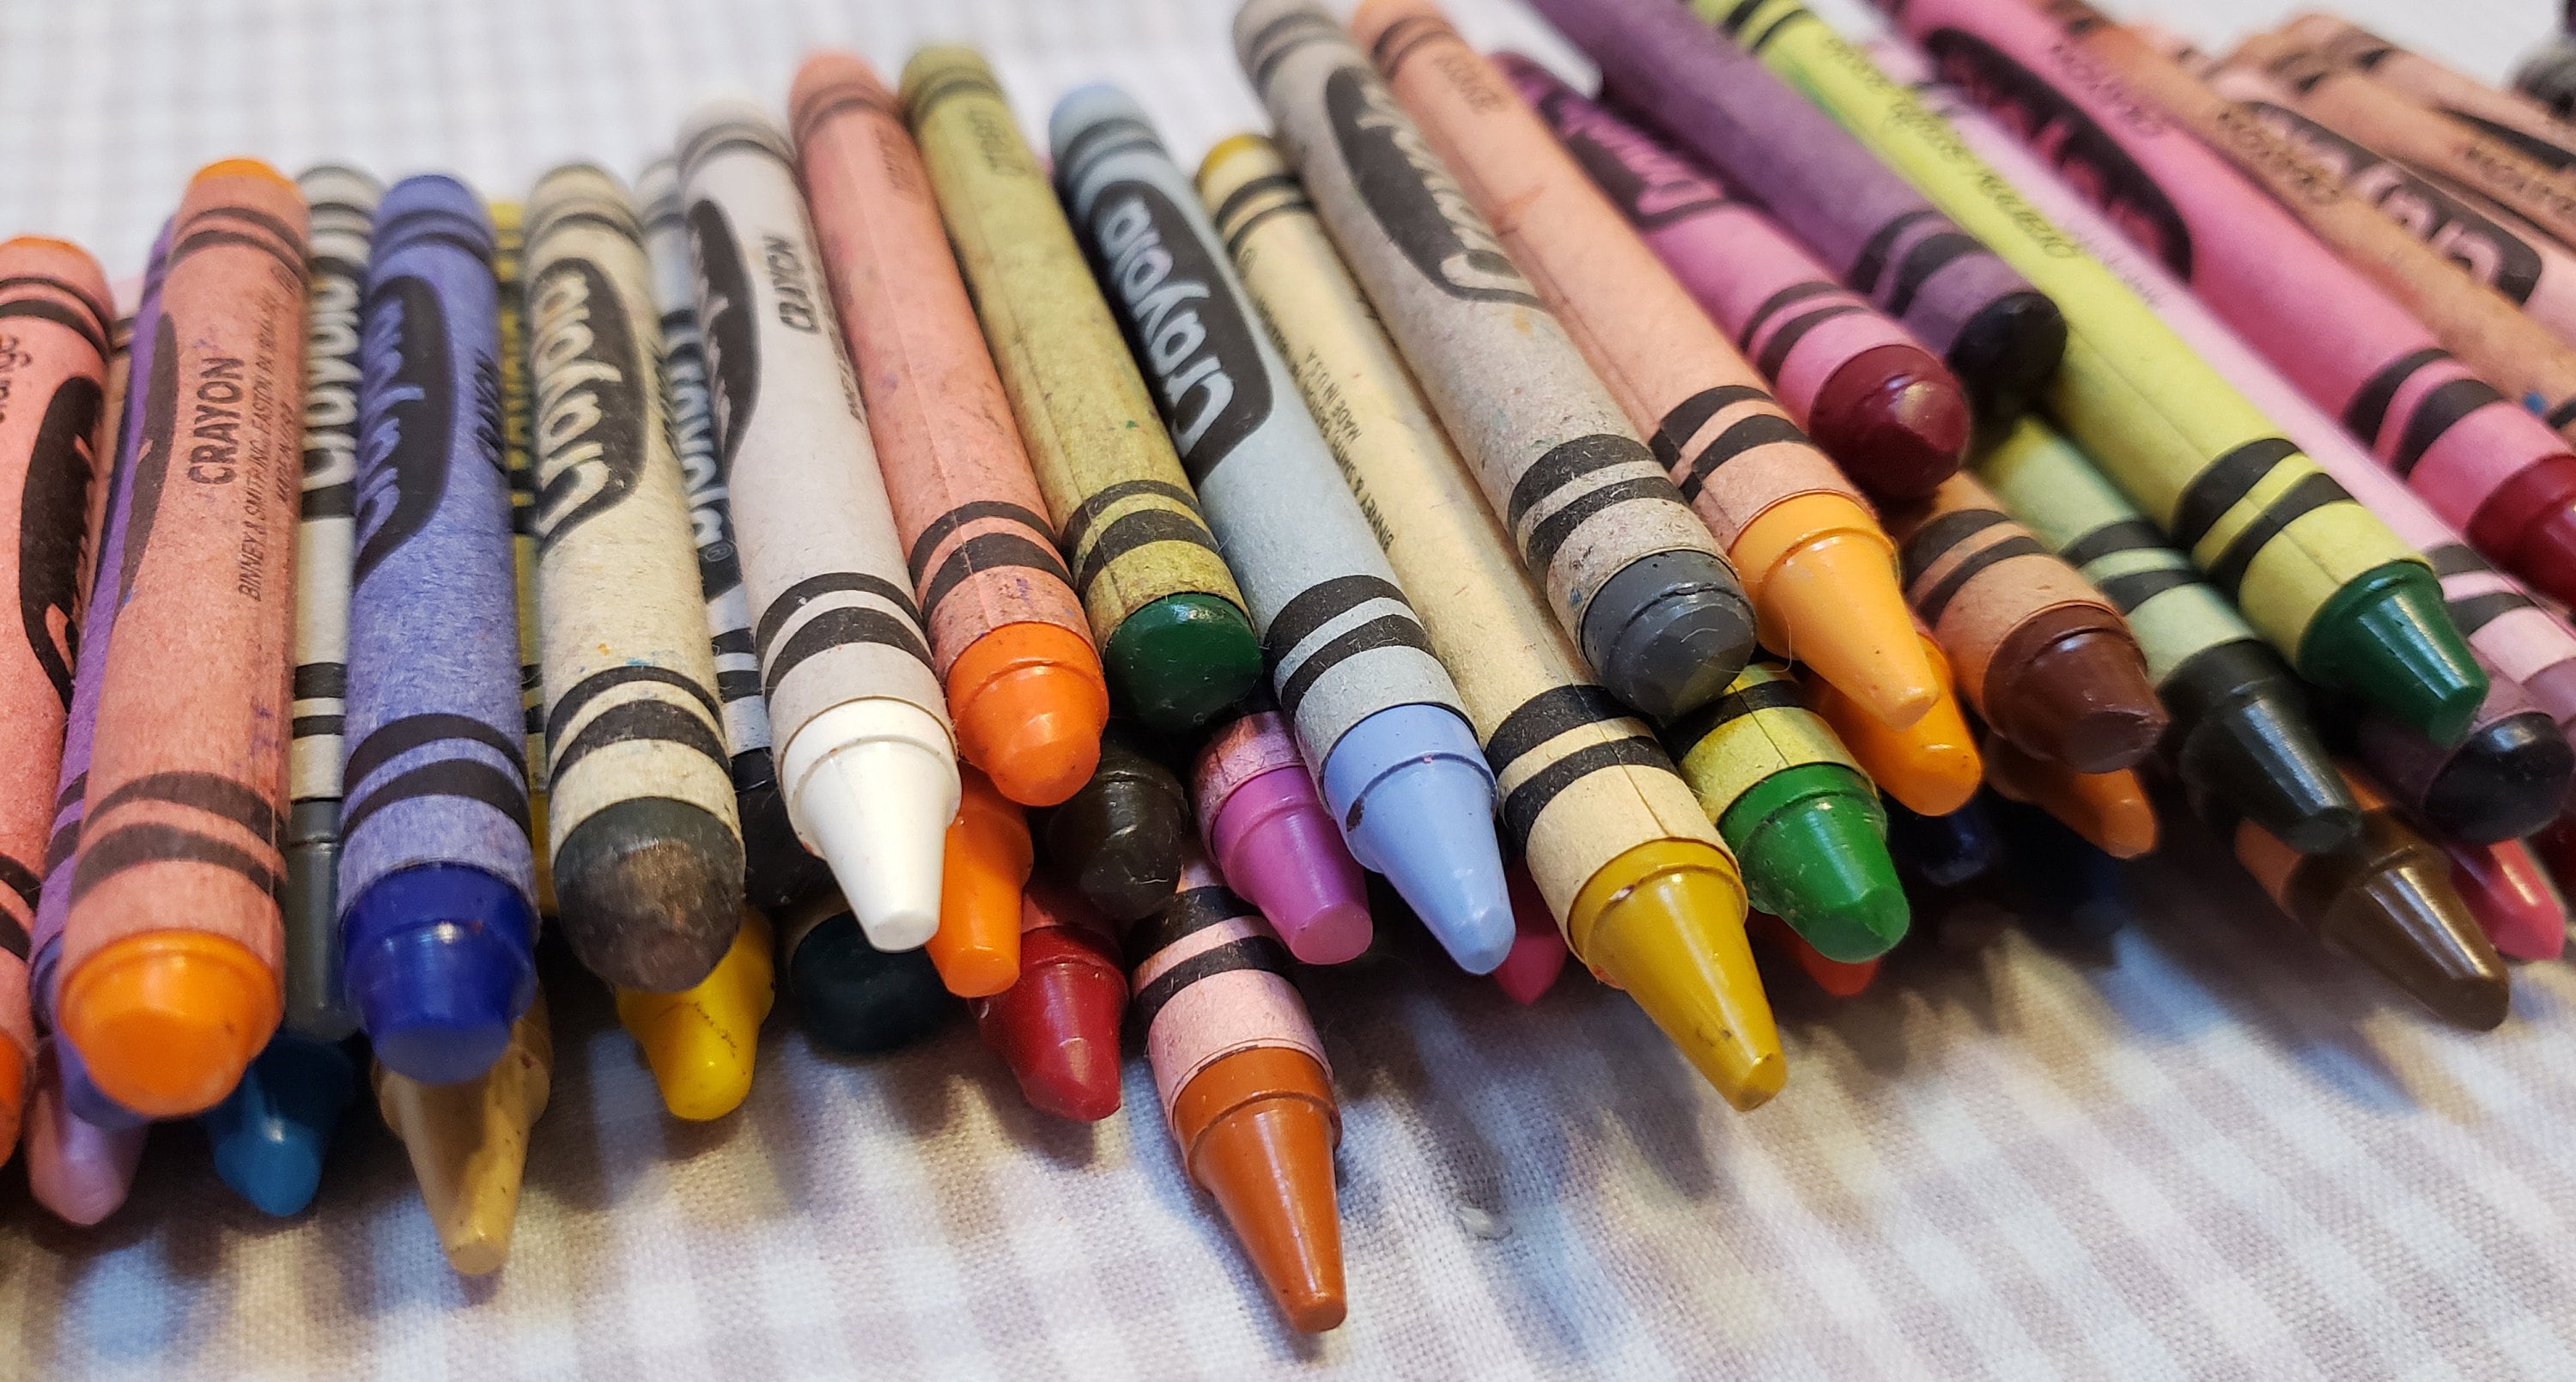 Unwrapped Crayola Crayons, 1 Pound Bulk Lot, Craft Crayons Melting 